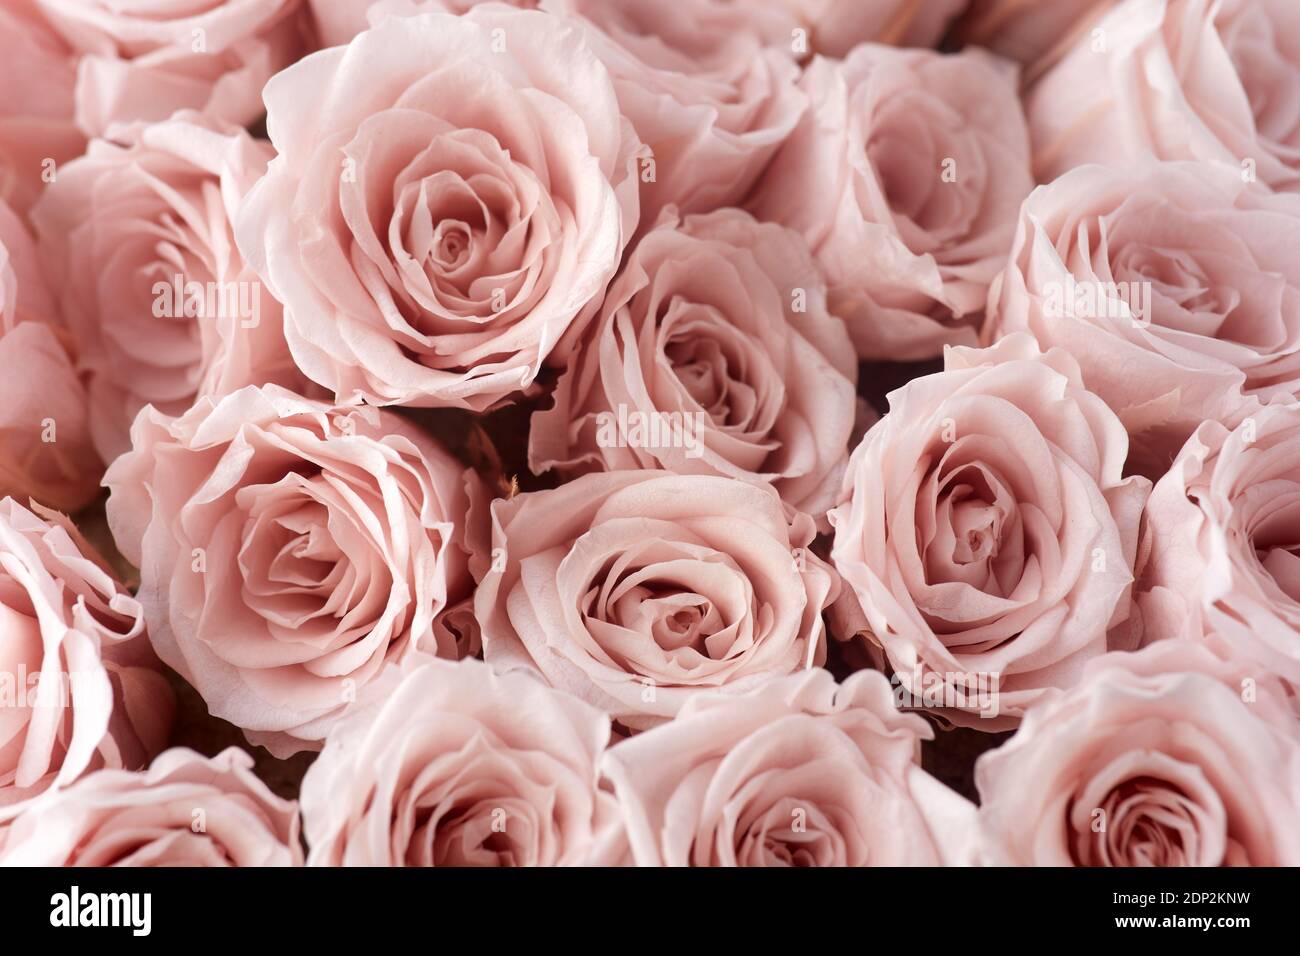 Rosa Rosen Hintergrund. Nahaufnahme Rosen Bündel Stockfotografie - Alamy